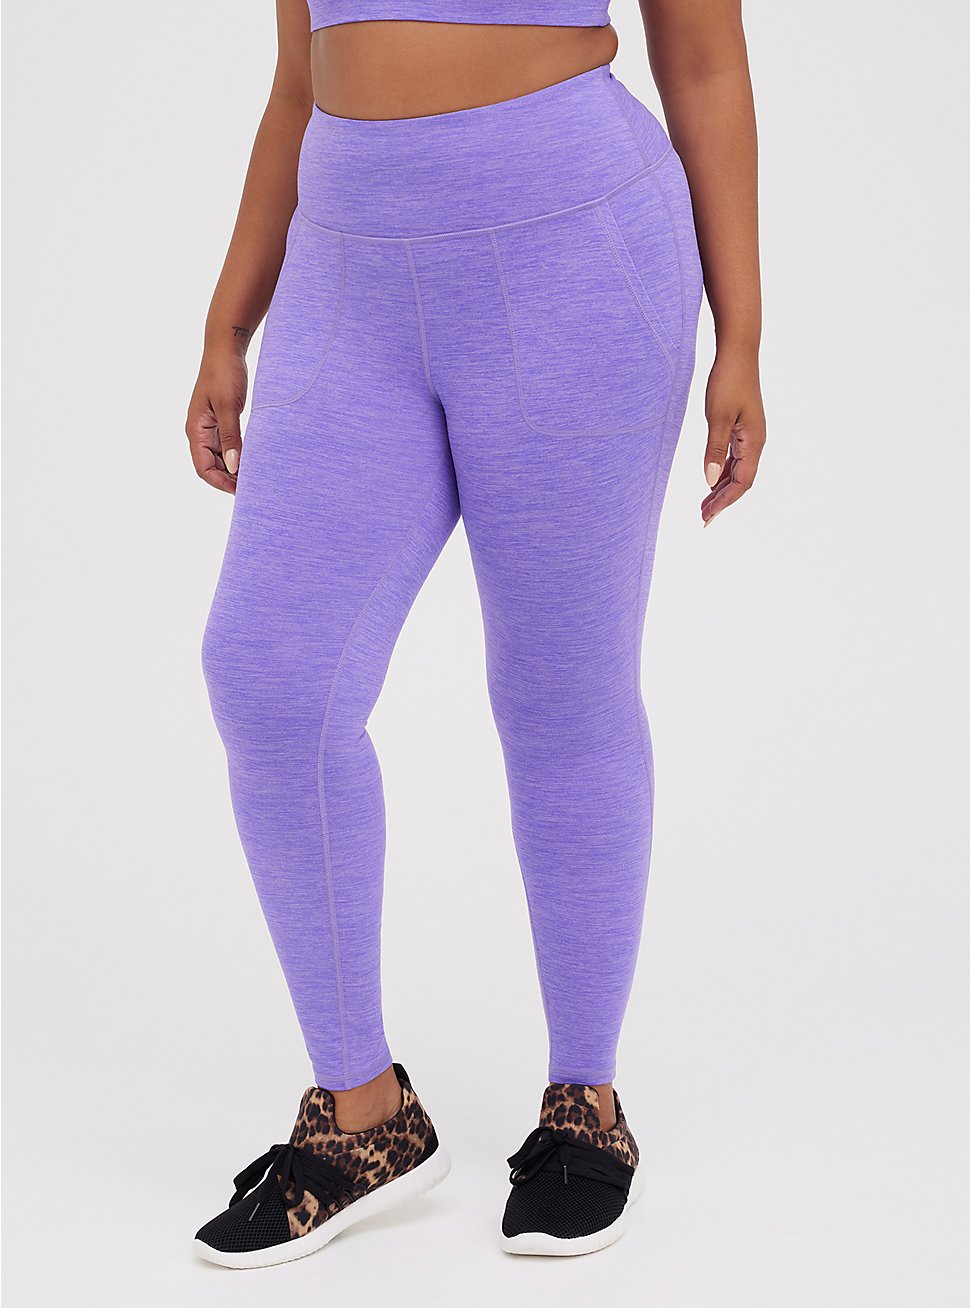 Full Length Legging - Performance Super Soft Jersey Neon Lavender, LAVENDER, hi-res